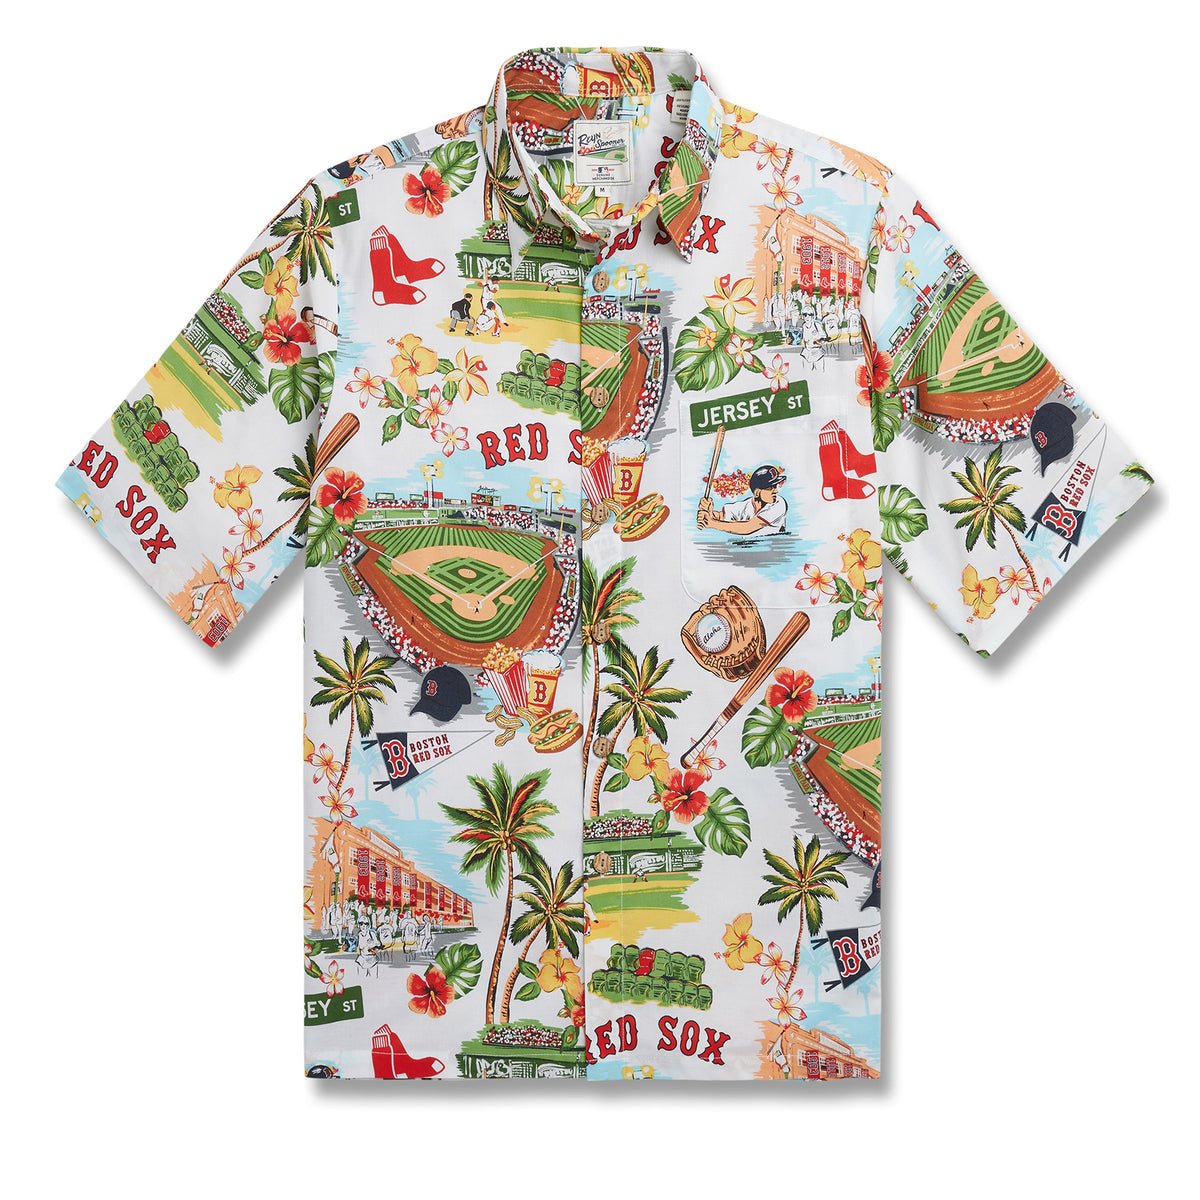 Atlanta Braves MLB Youth Size XL (16-18) Baseball Jersey Style Shirt